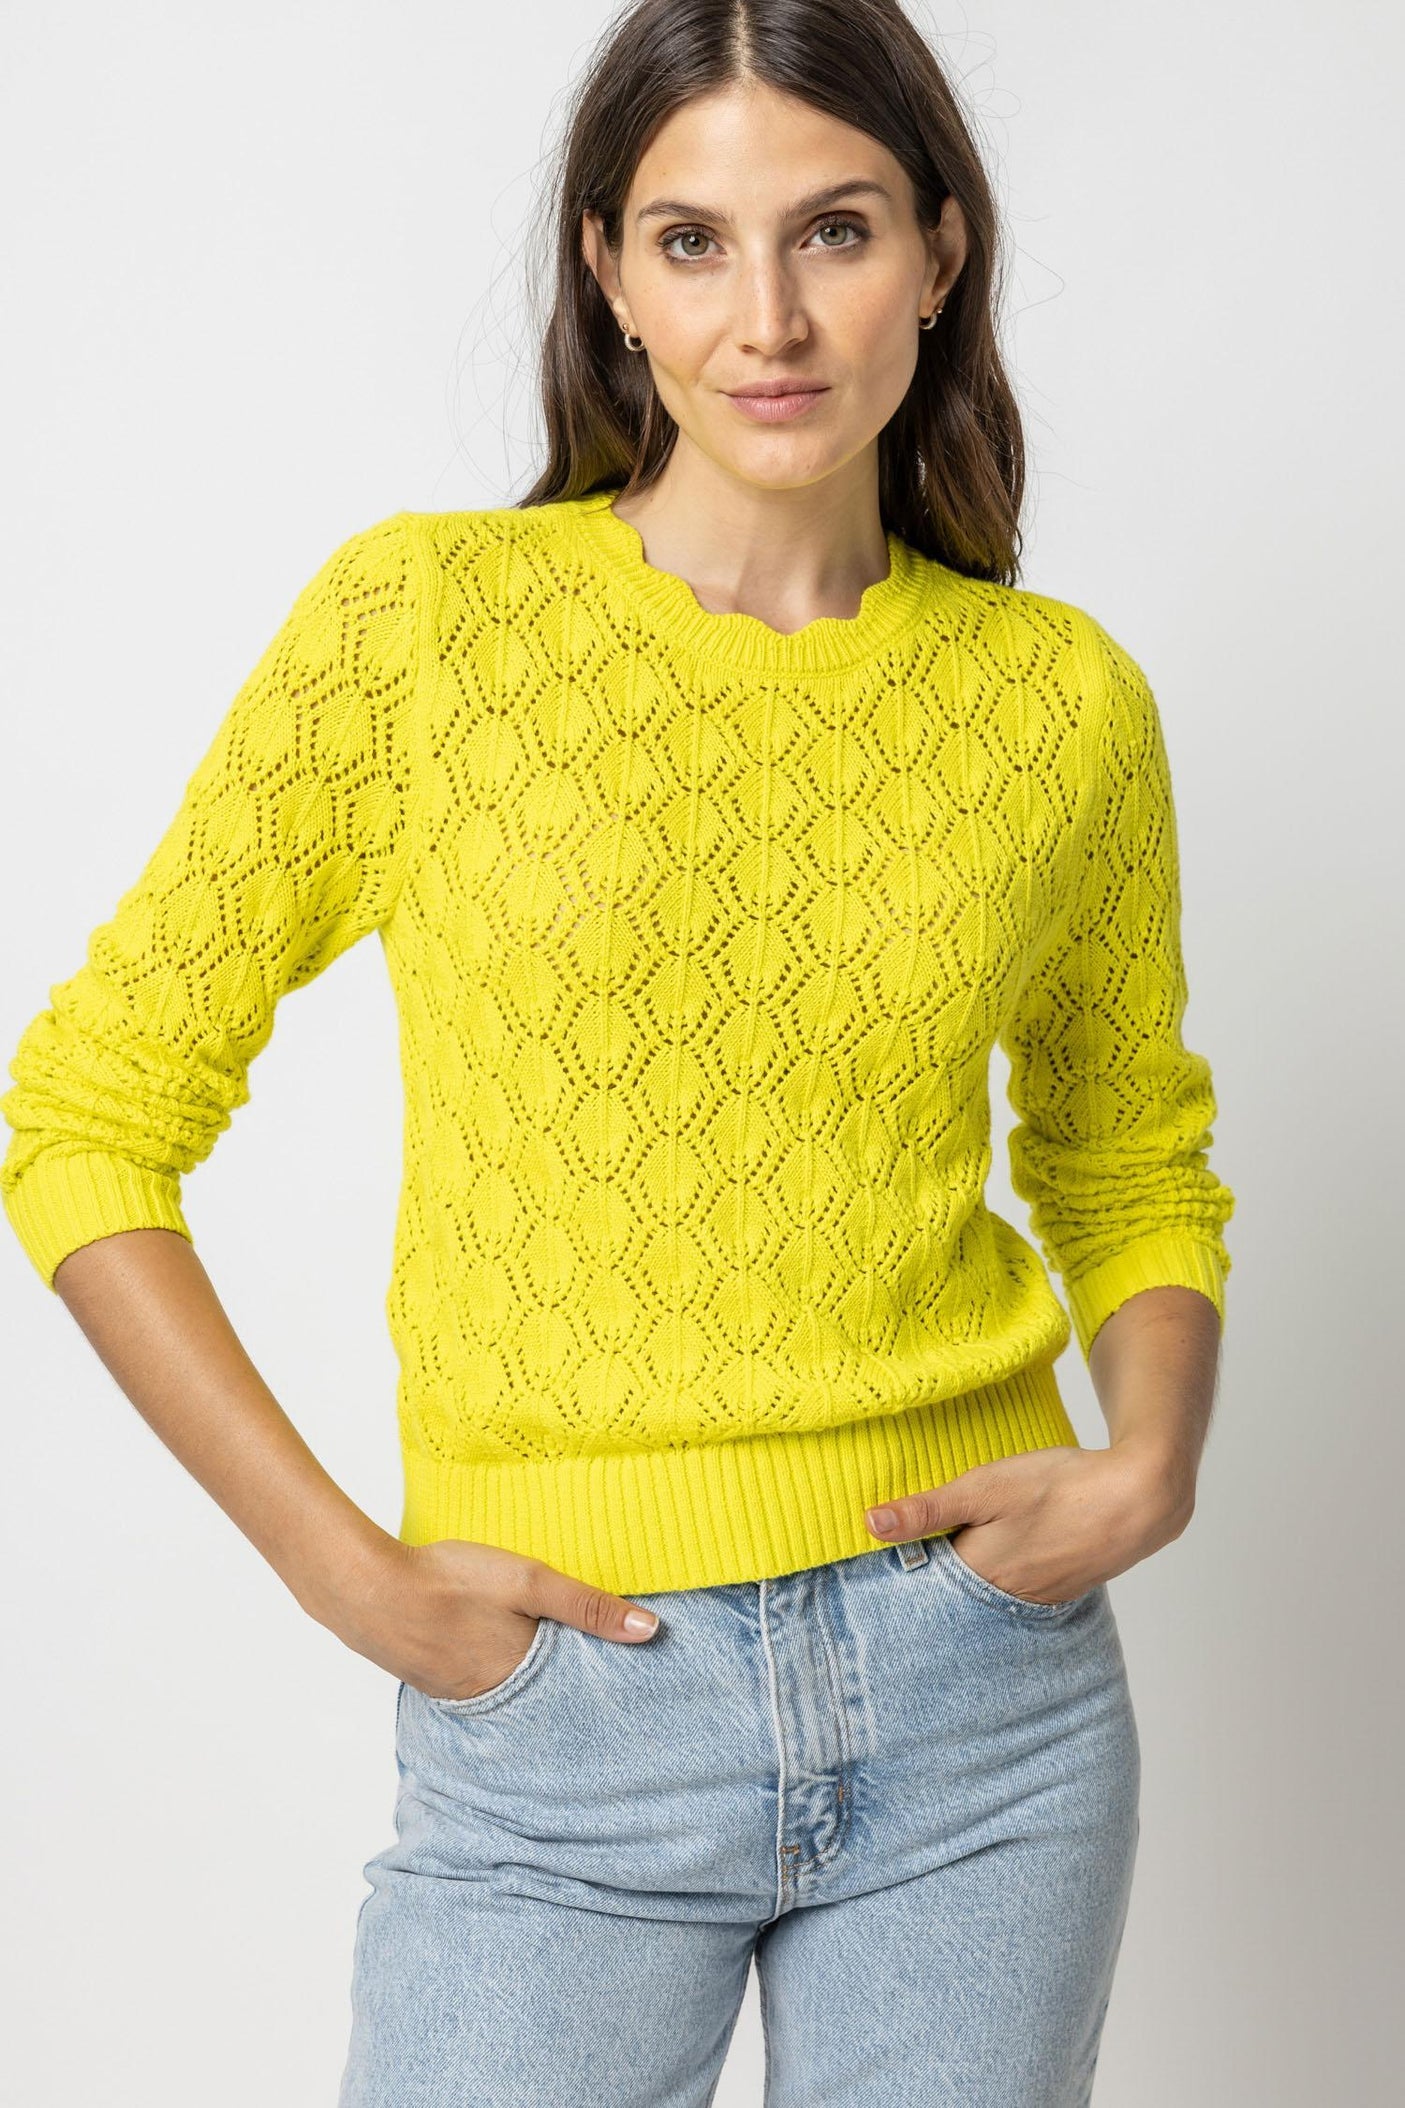 Pointelle Stitch Crewneck Sweater in Lemon Lime